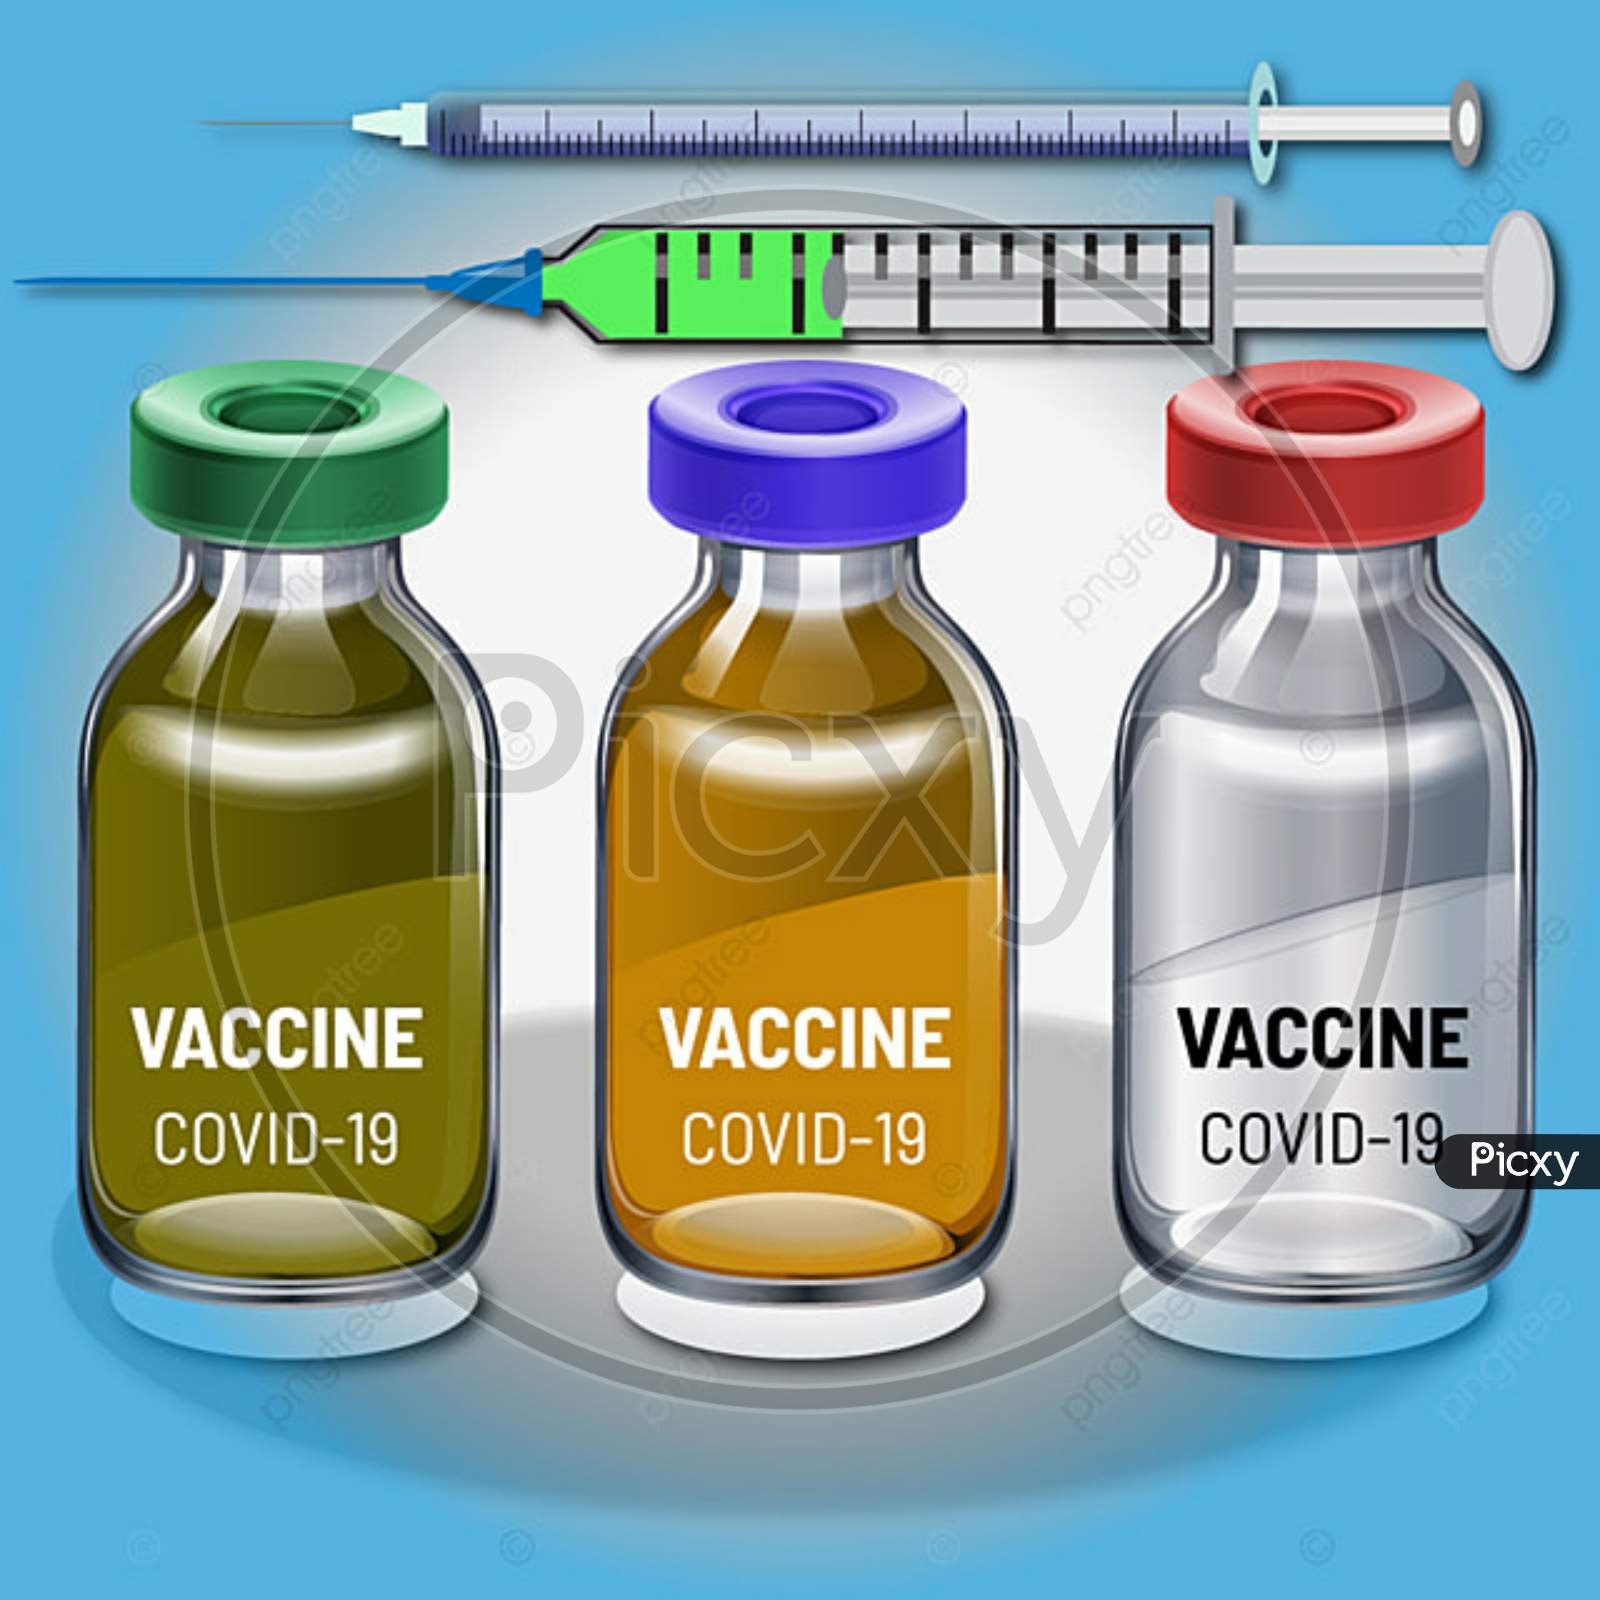 Corona vaccine.